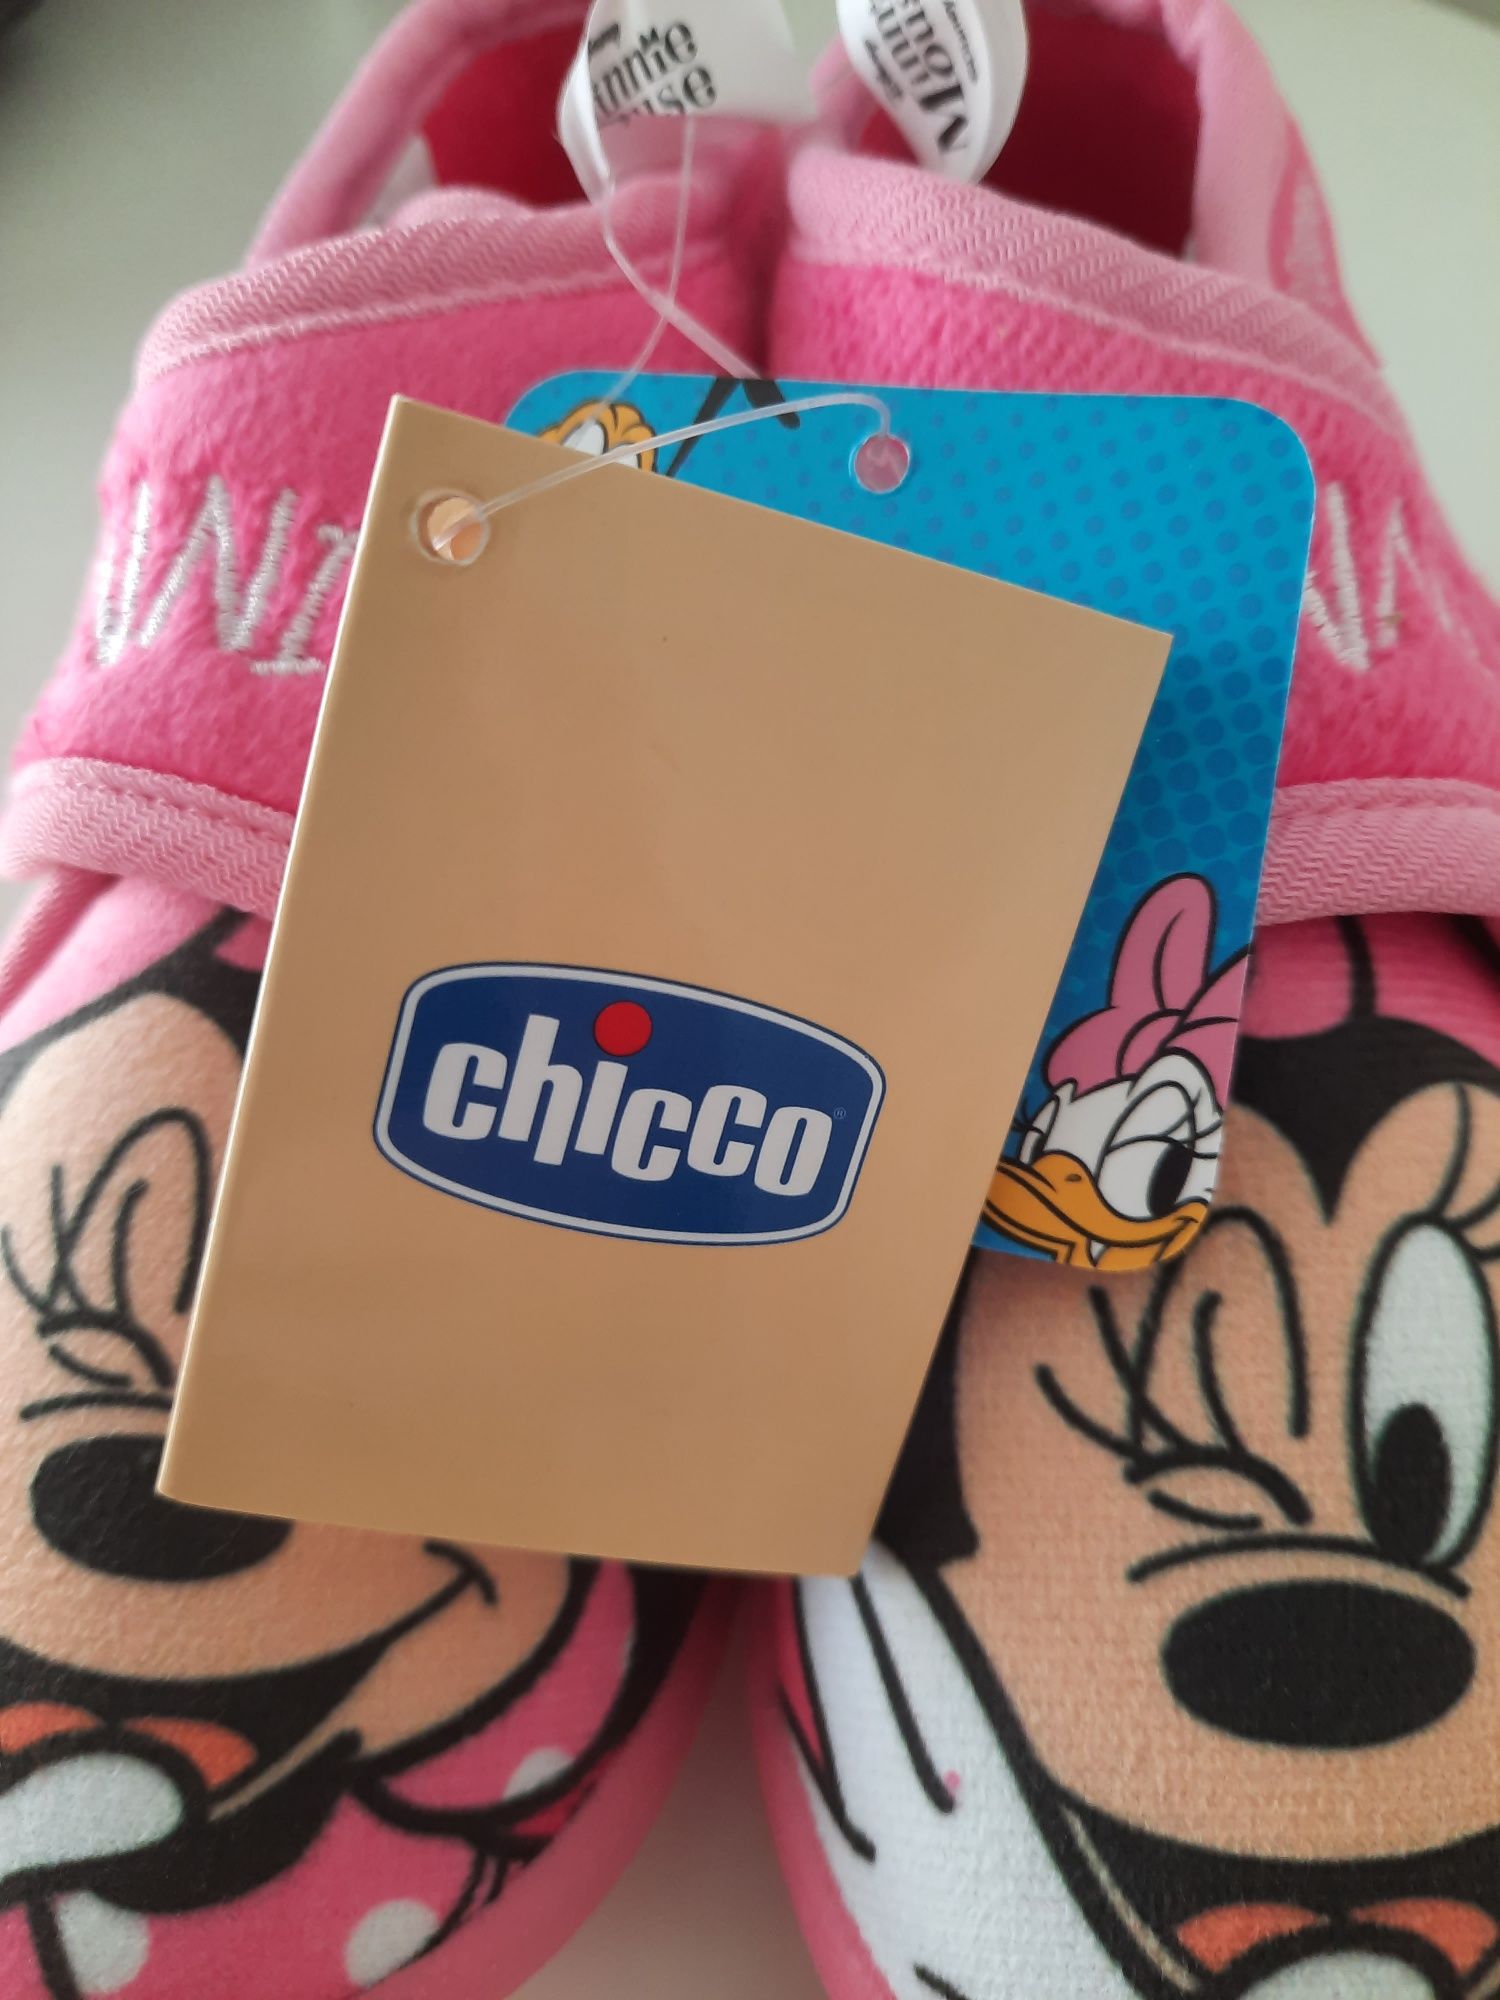 Pantufas Minnie - Chicco / Disney (novas com etiqueta) - n.º 26